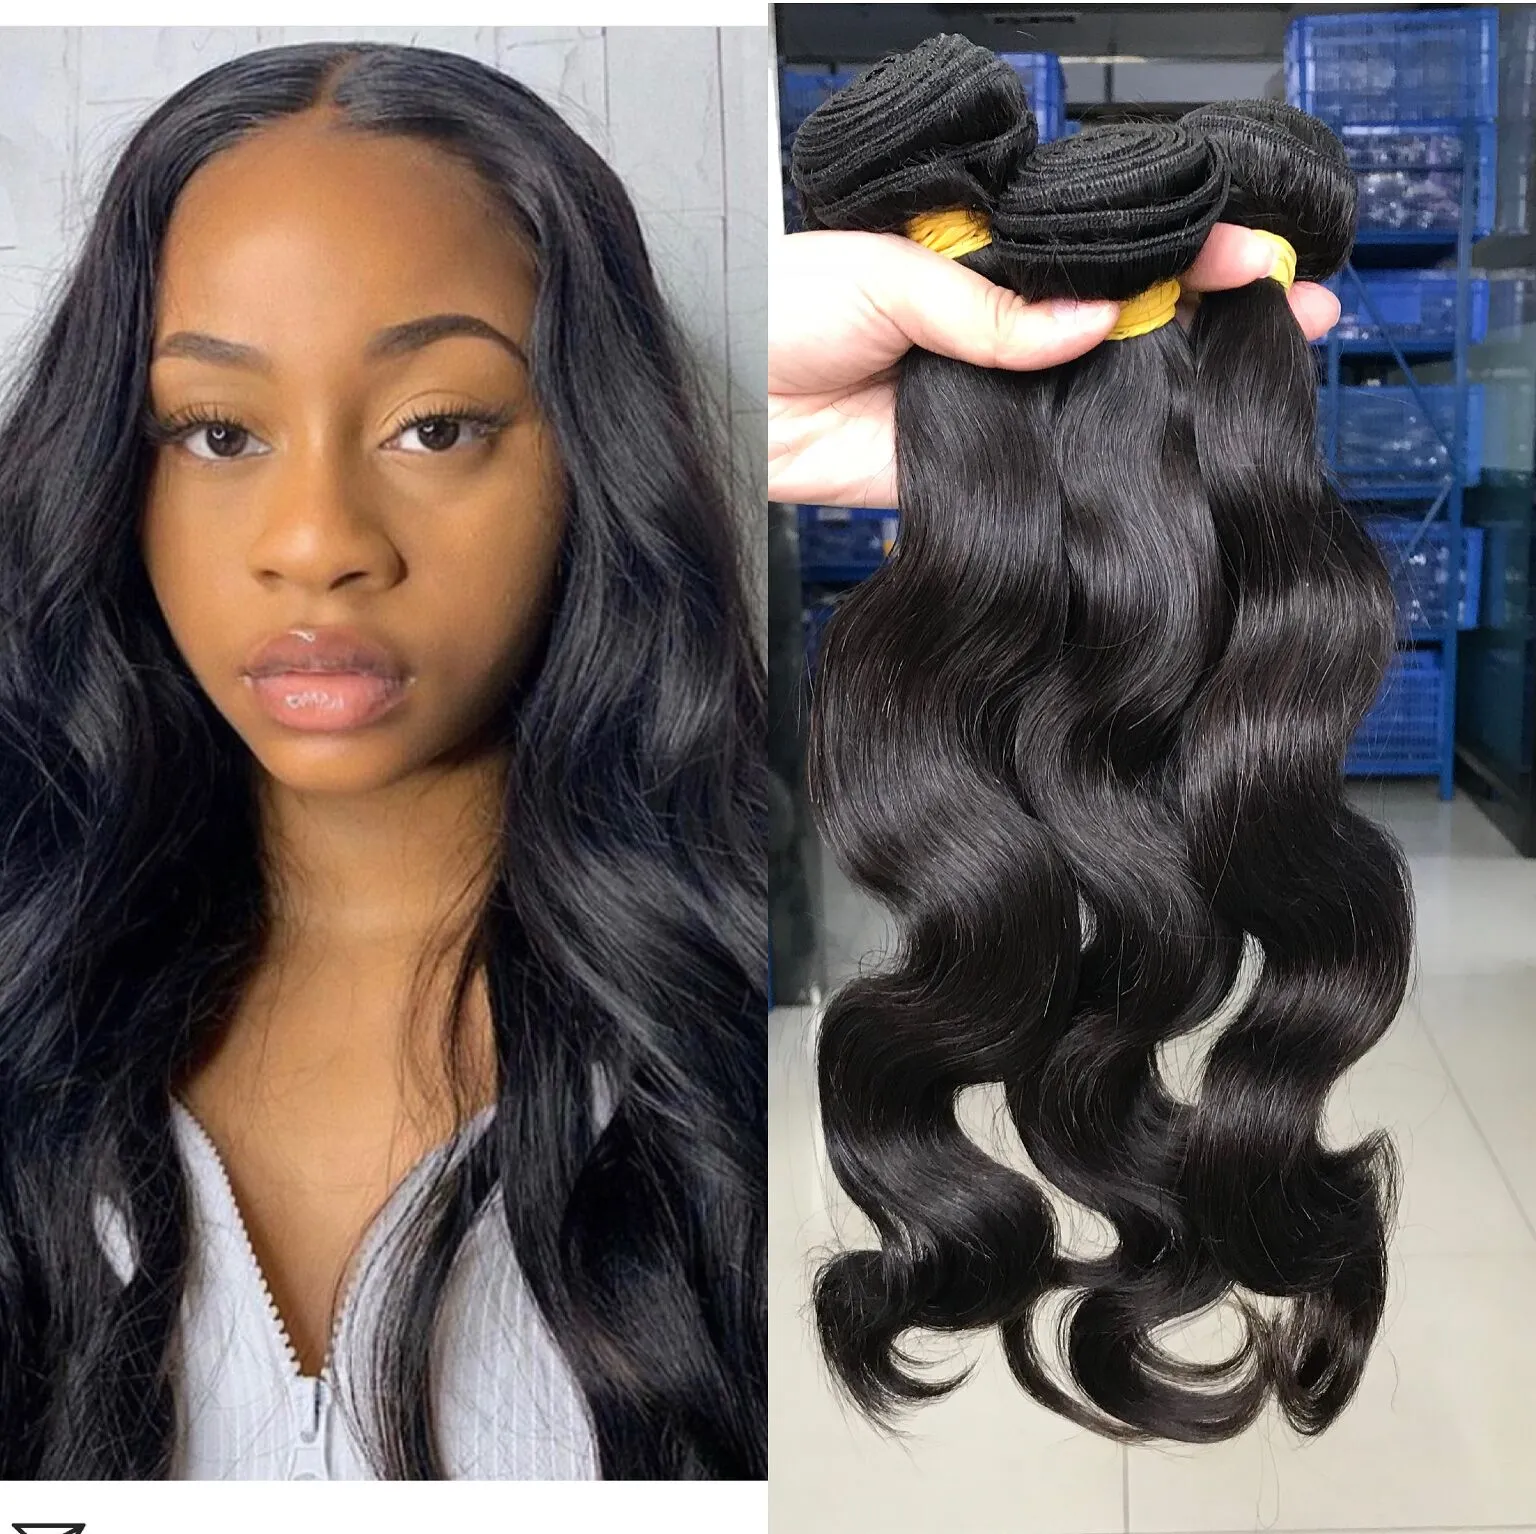 Body wave human hair bundles 3 pcs glamorous best quality virgin hair extension for black women